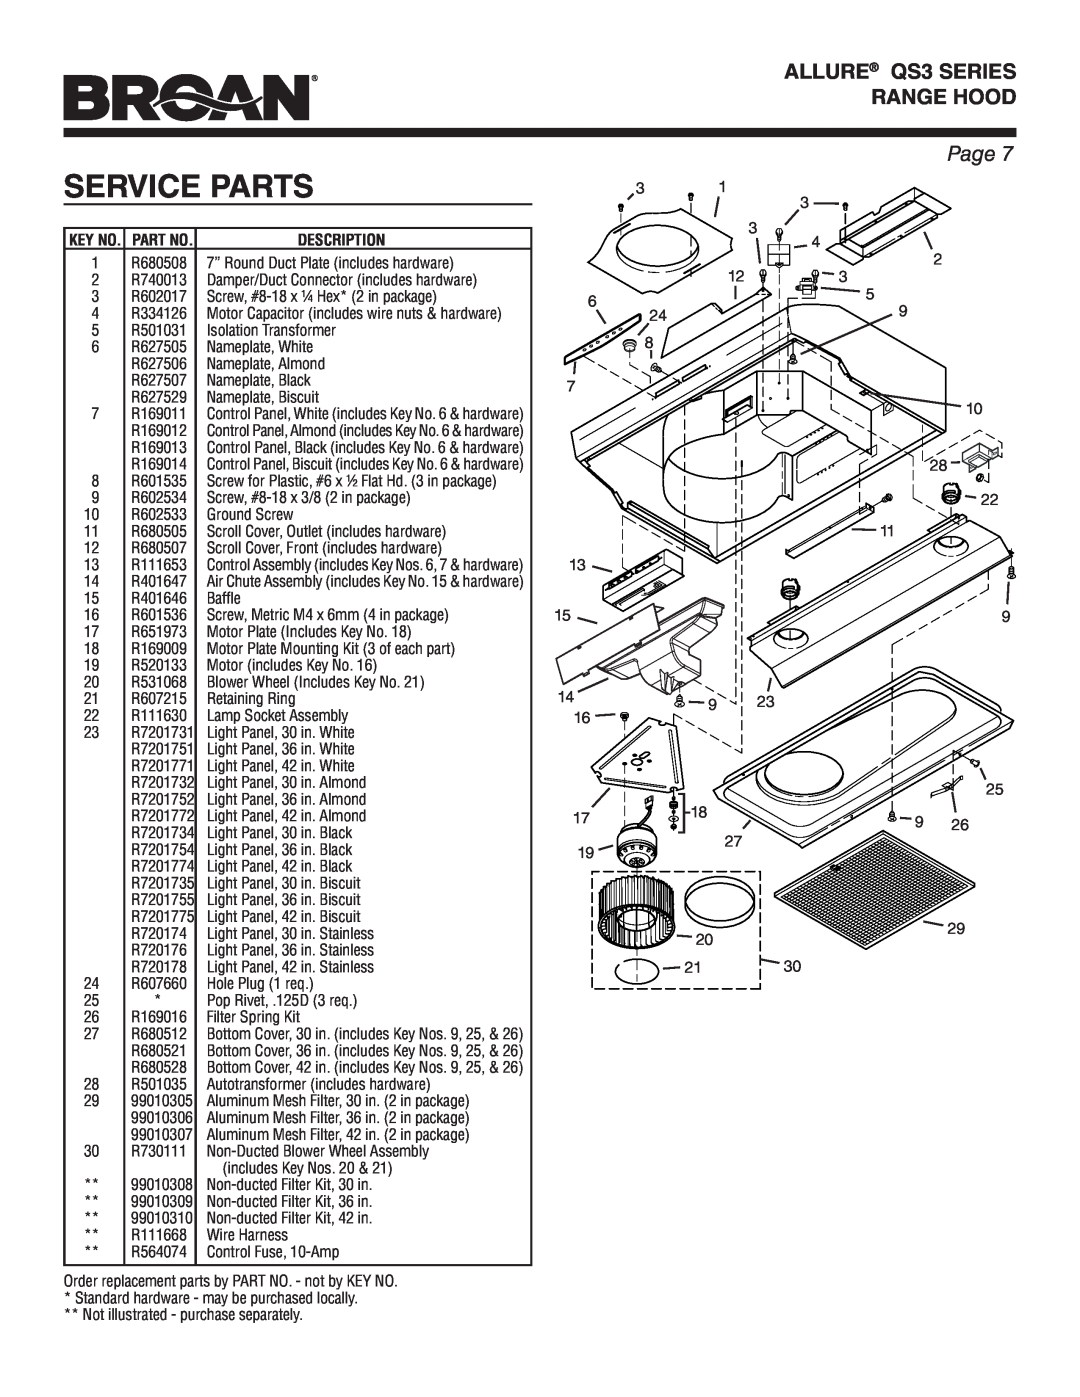 Broan QS342SS warranty Service Parts, Key No. Part No, ALLURE QS3 SERIES RANGE HOOD, Page 